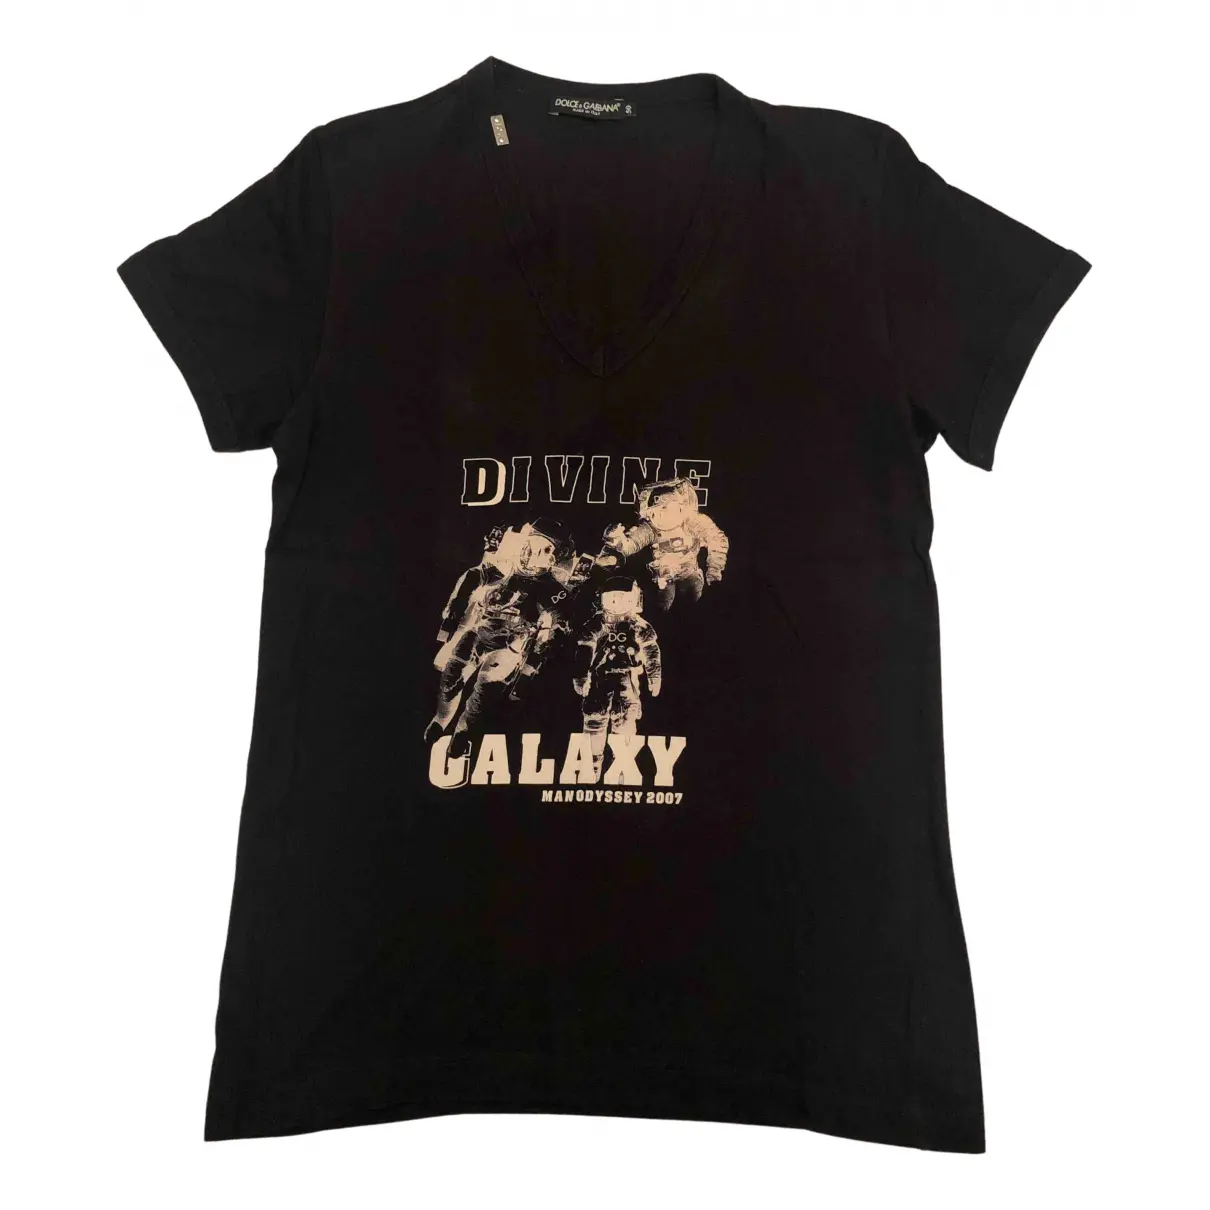 Black Cotton T-shirt Dolce & Gabbana